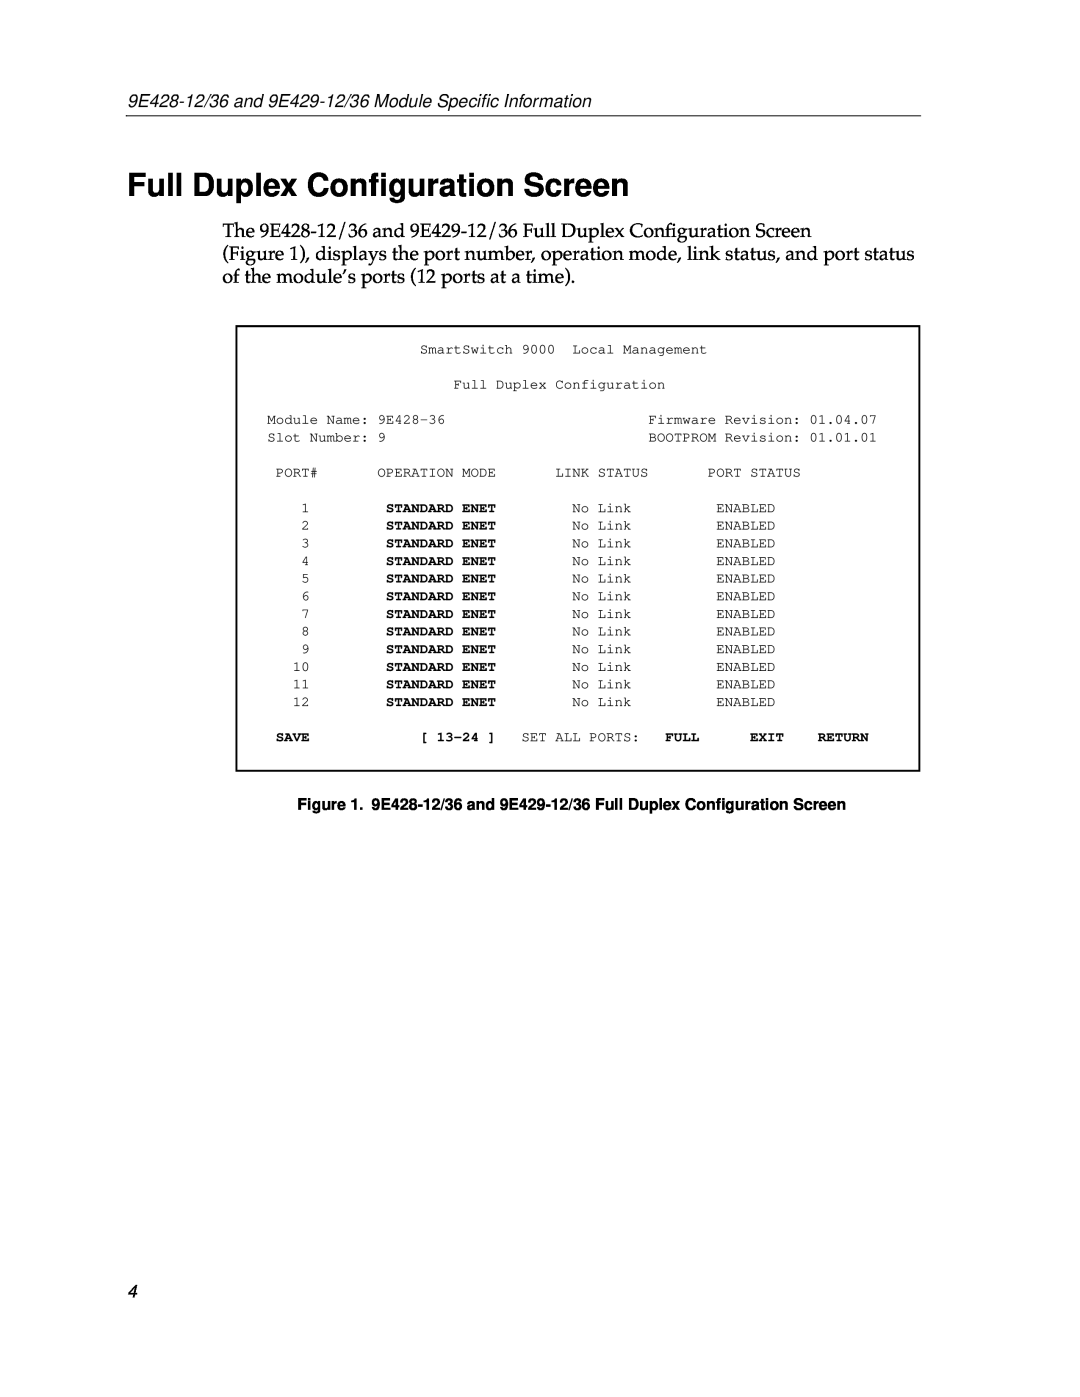 Cabletron Systems 9E429-36 Full Duplex Conﬁguration Screen, 9E428-12/36 and 9E429-12/36 Module Speciﬁc Information 